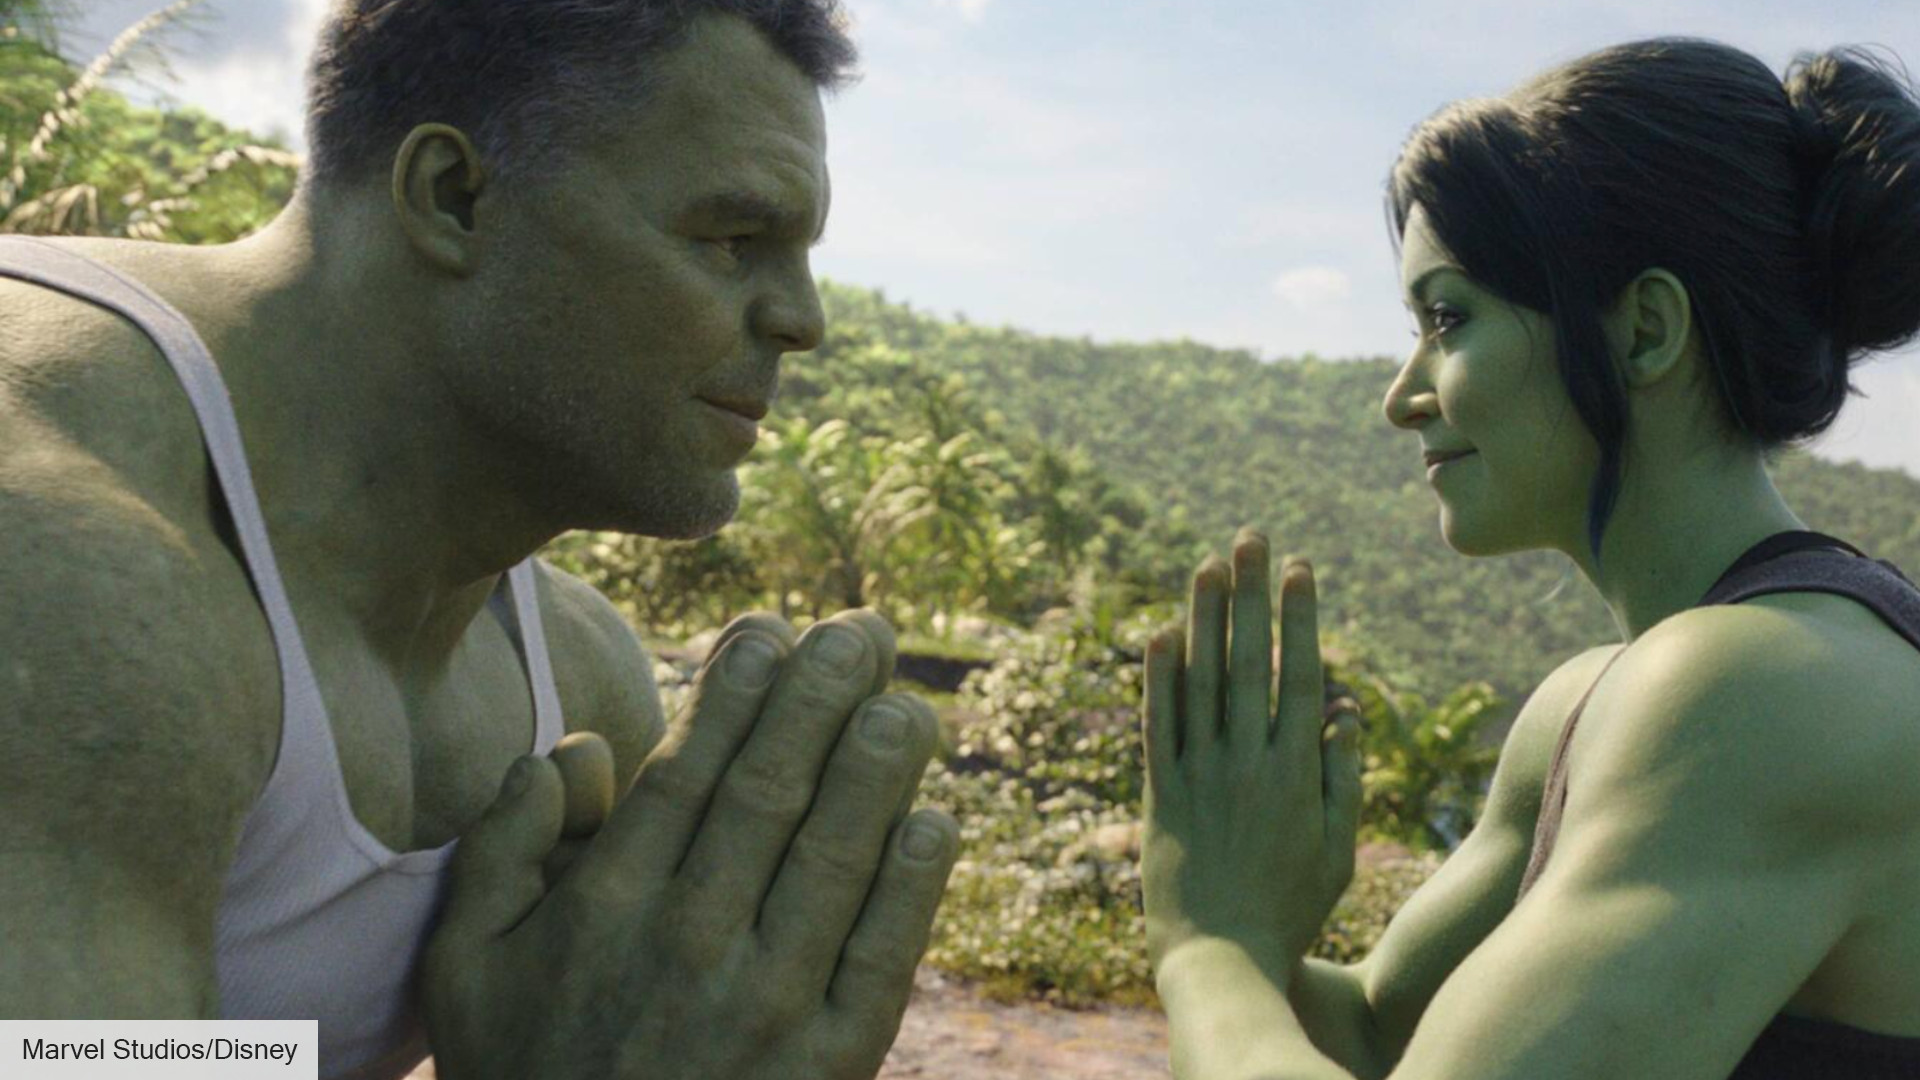 Mark Ruffalo Drops Hint About Hulk's Role in Thor: Ragnarok